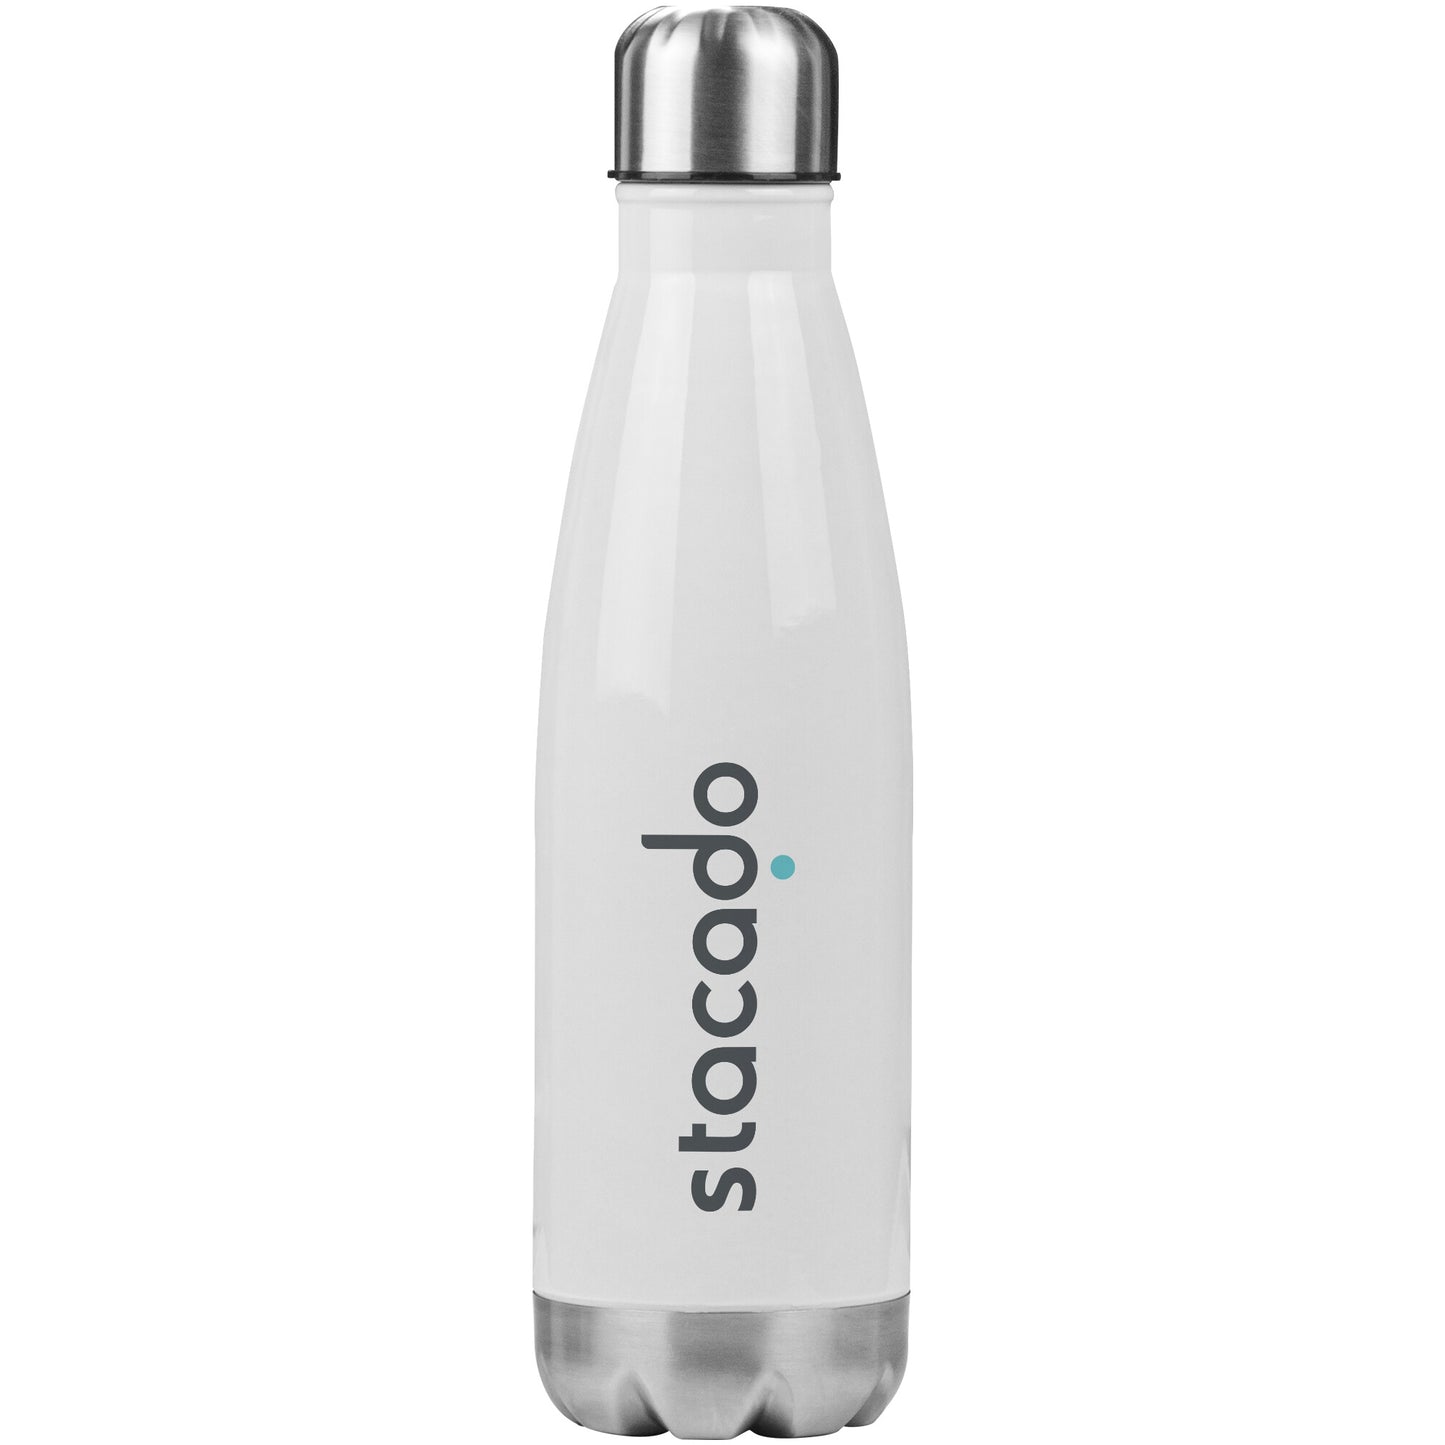 Stacado Water Bottle